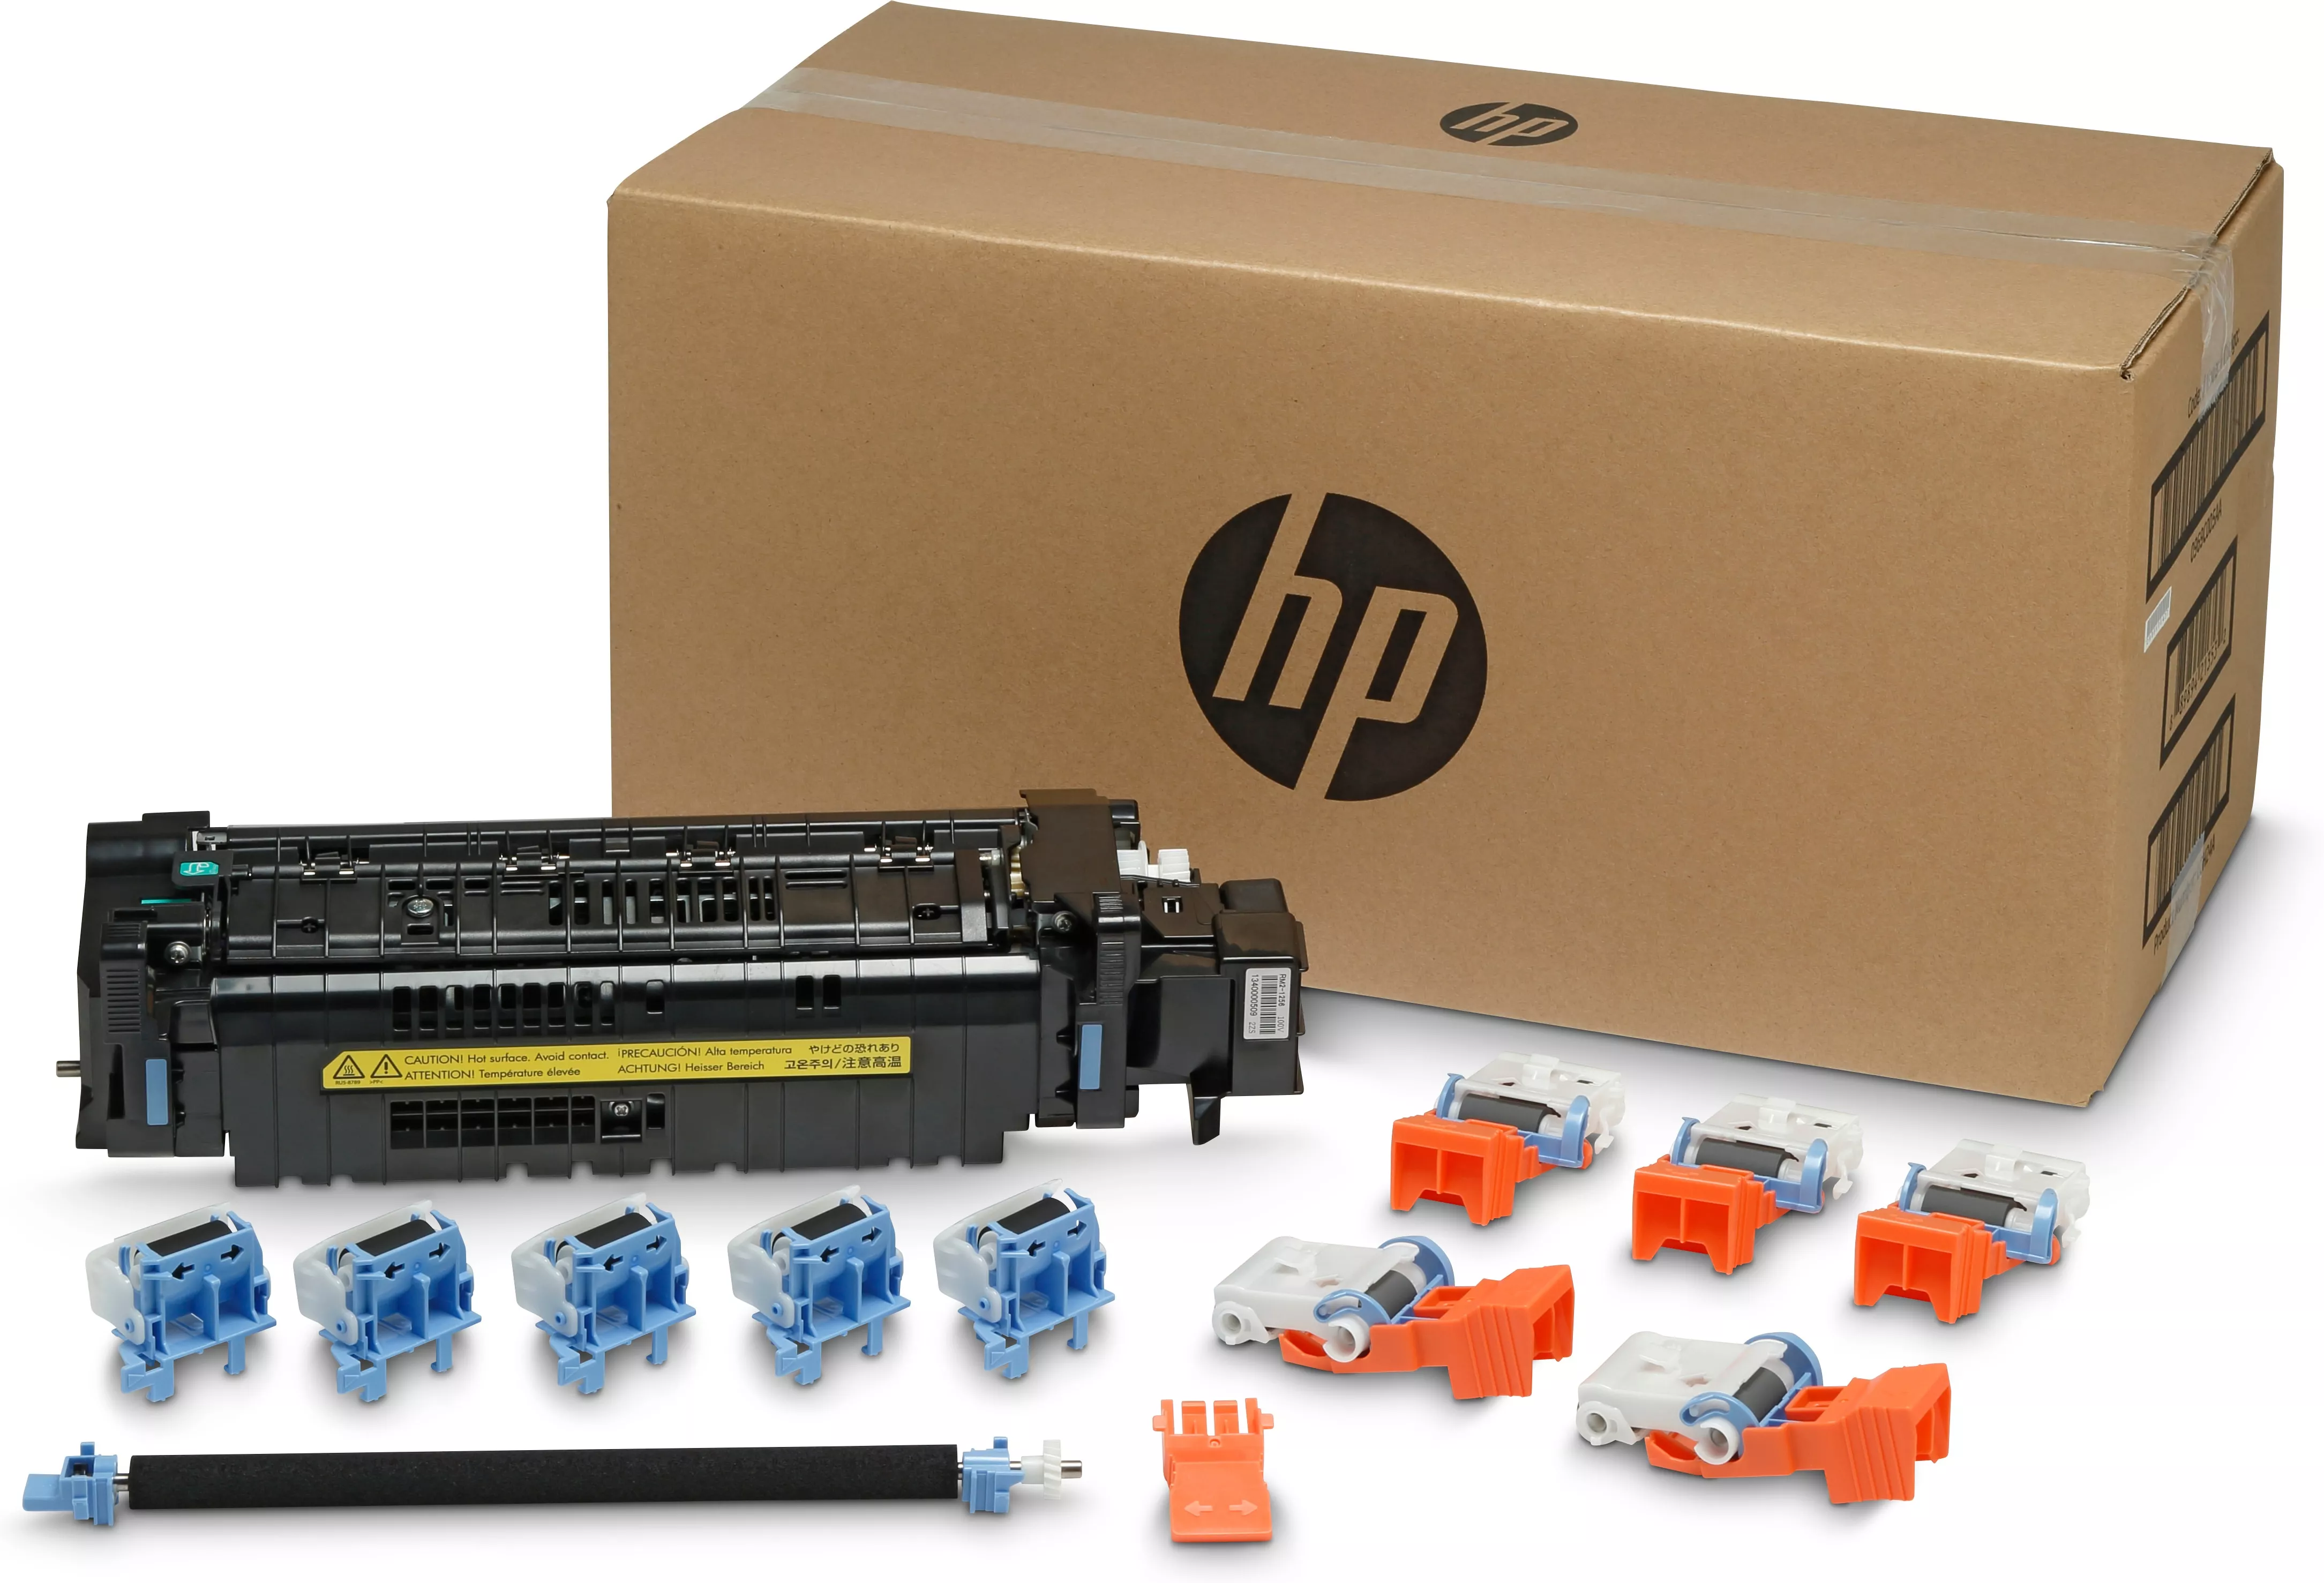 Achat HP LaserJet 220v Maintenance Kit au meilleur prix